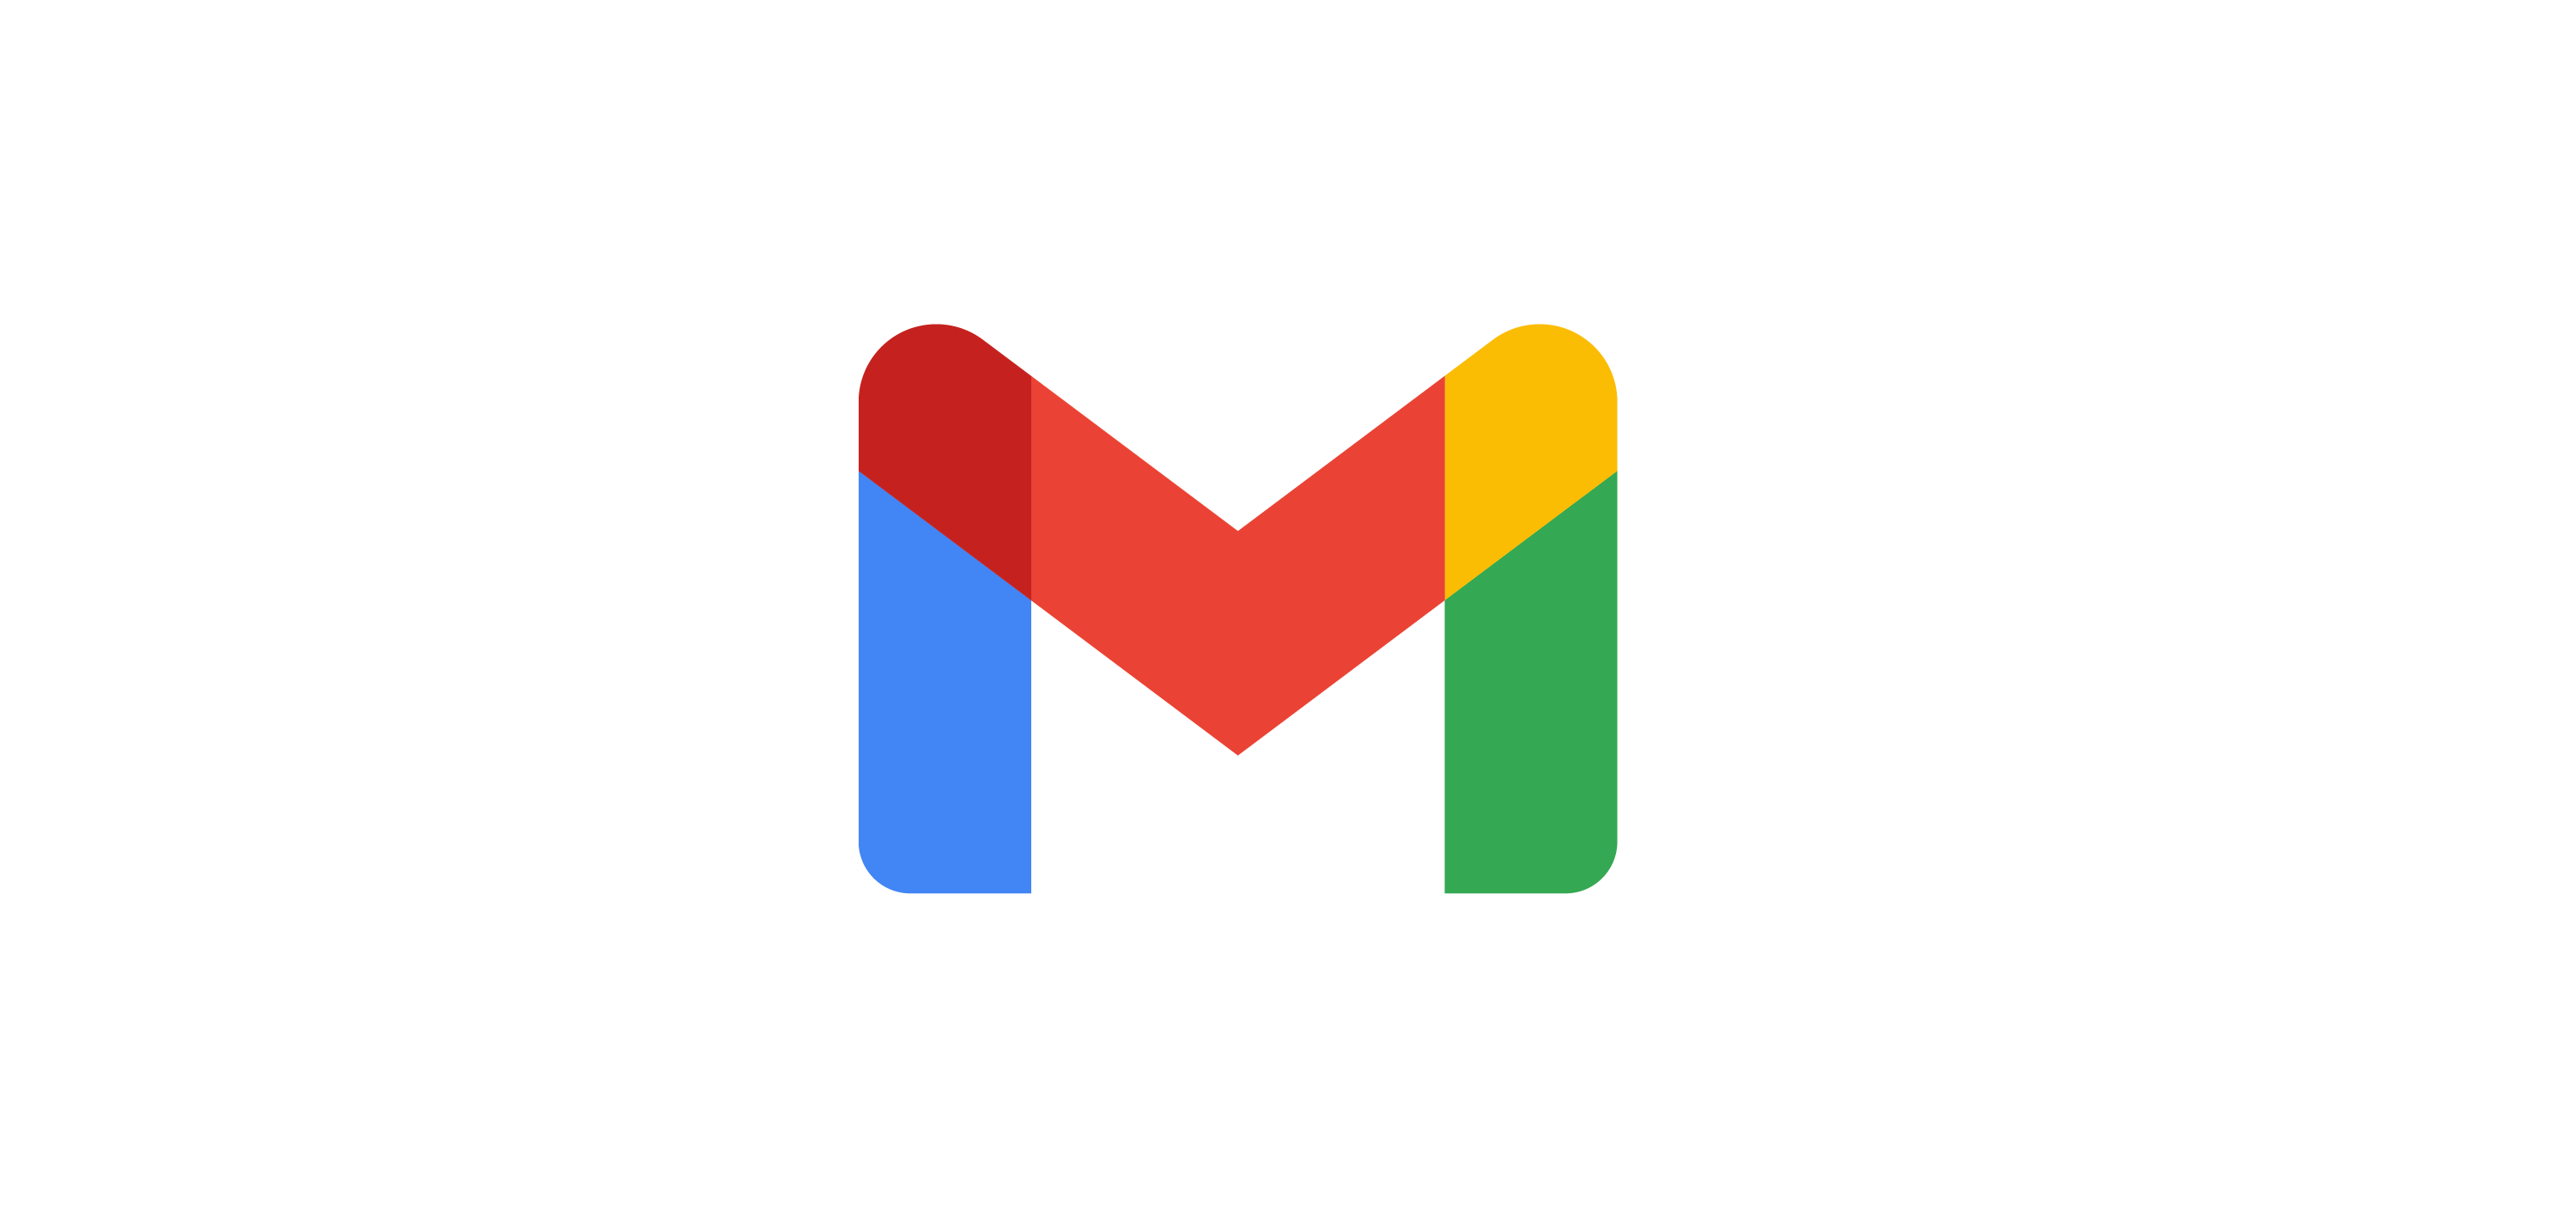 gmail logo 2020